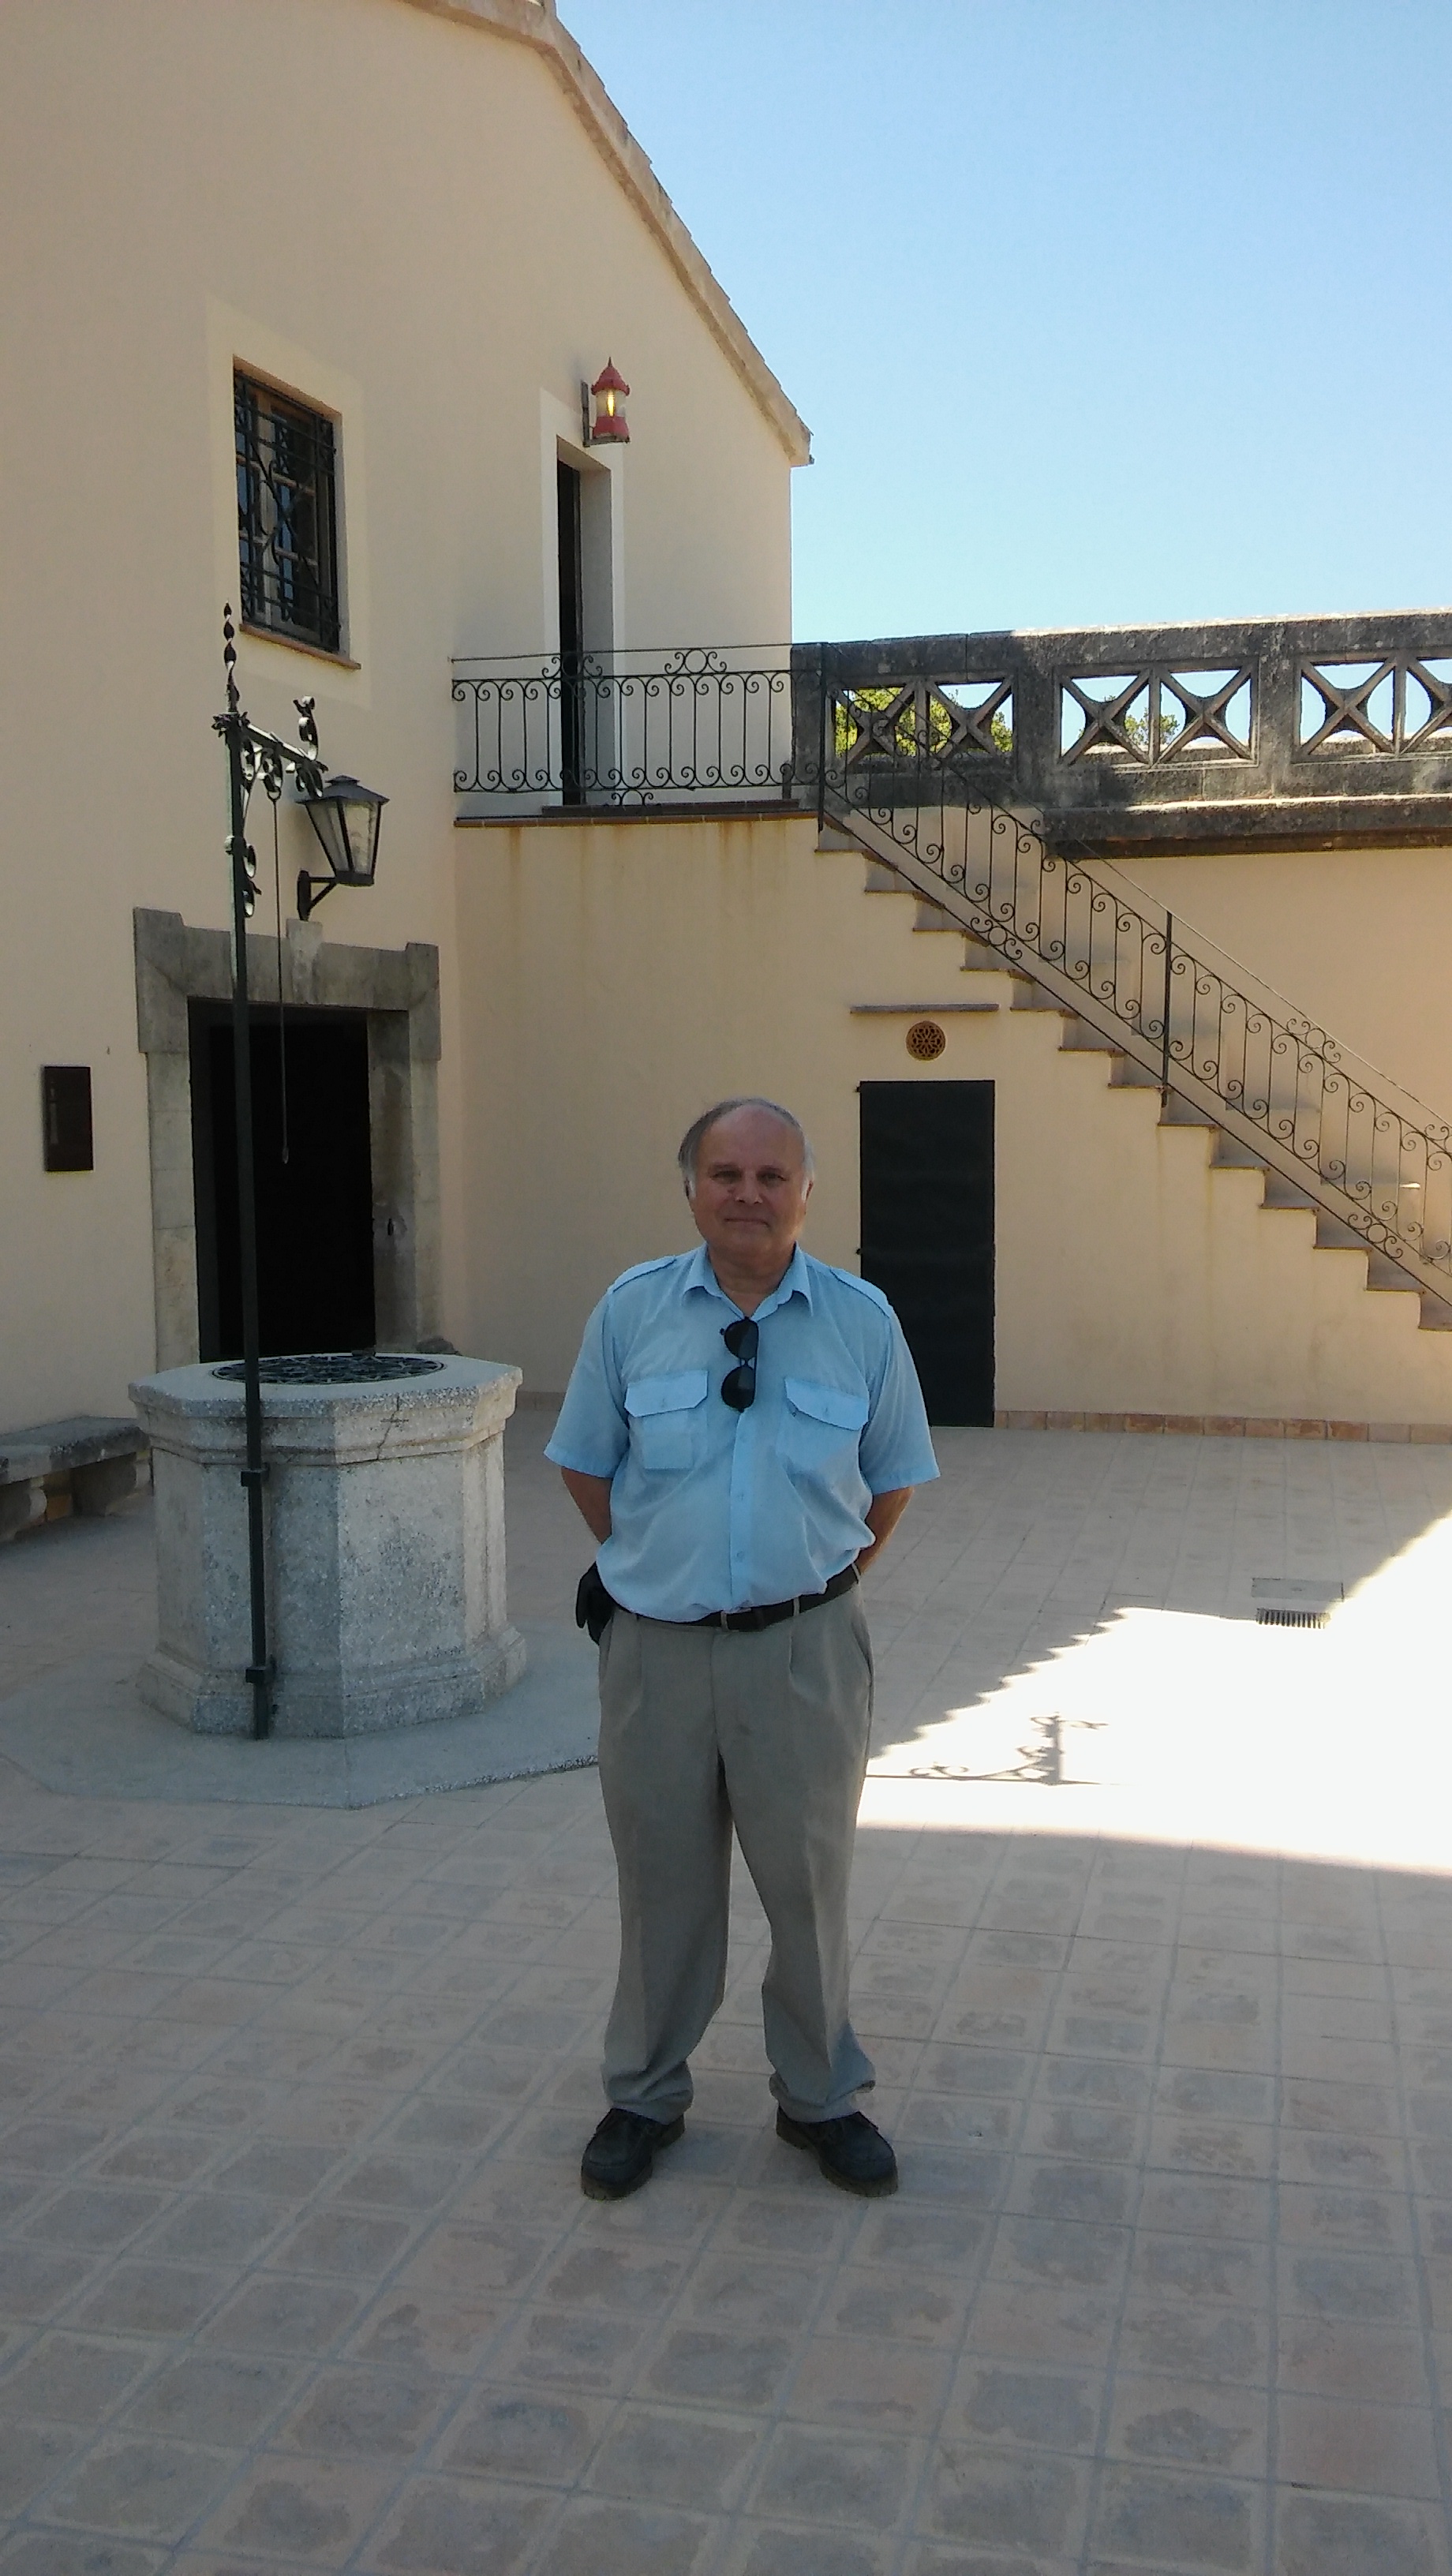 Juan Antonio García's last guided tour at the Porto Pi lighthouse